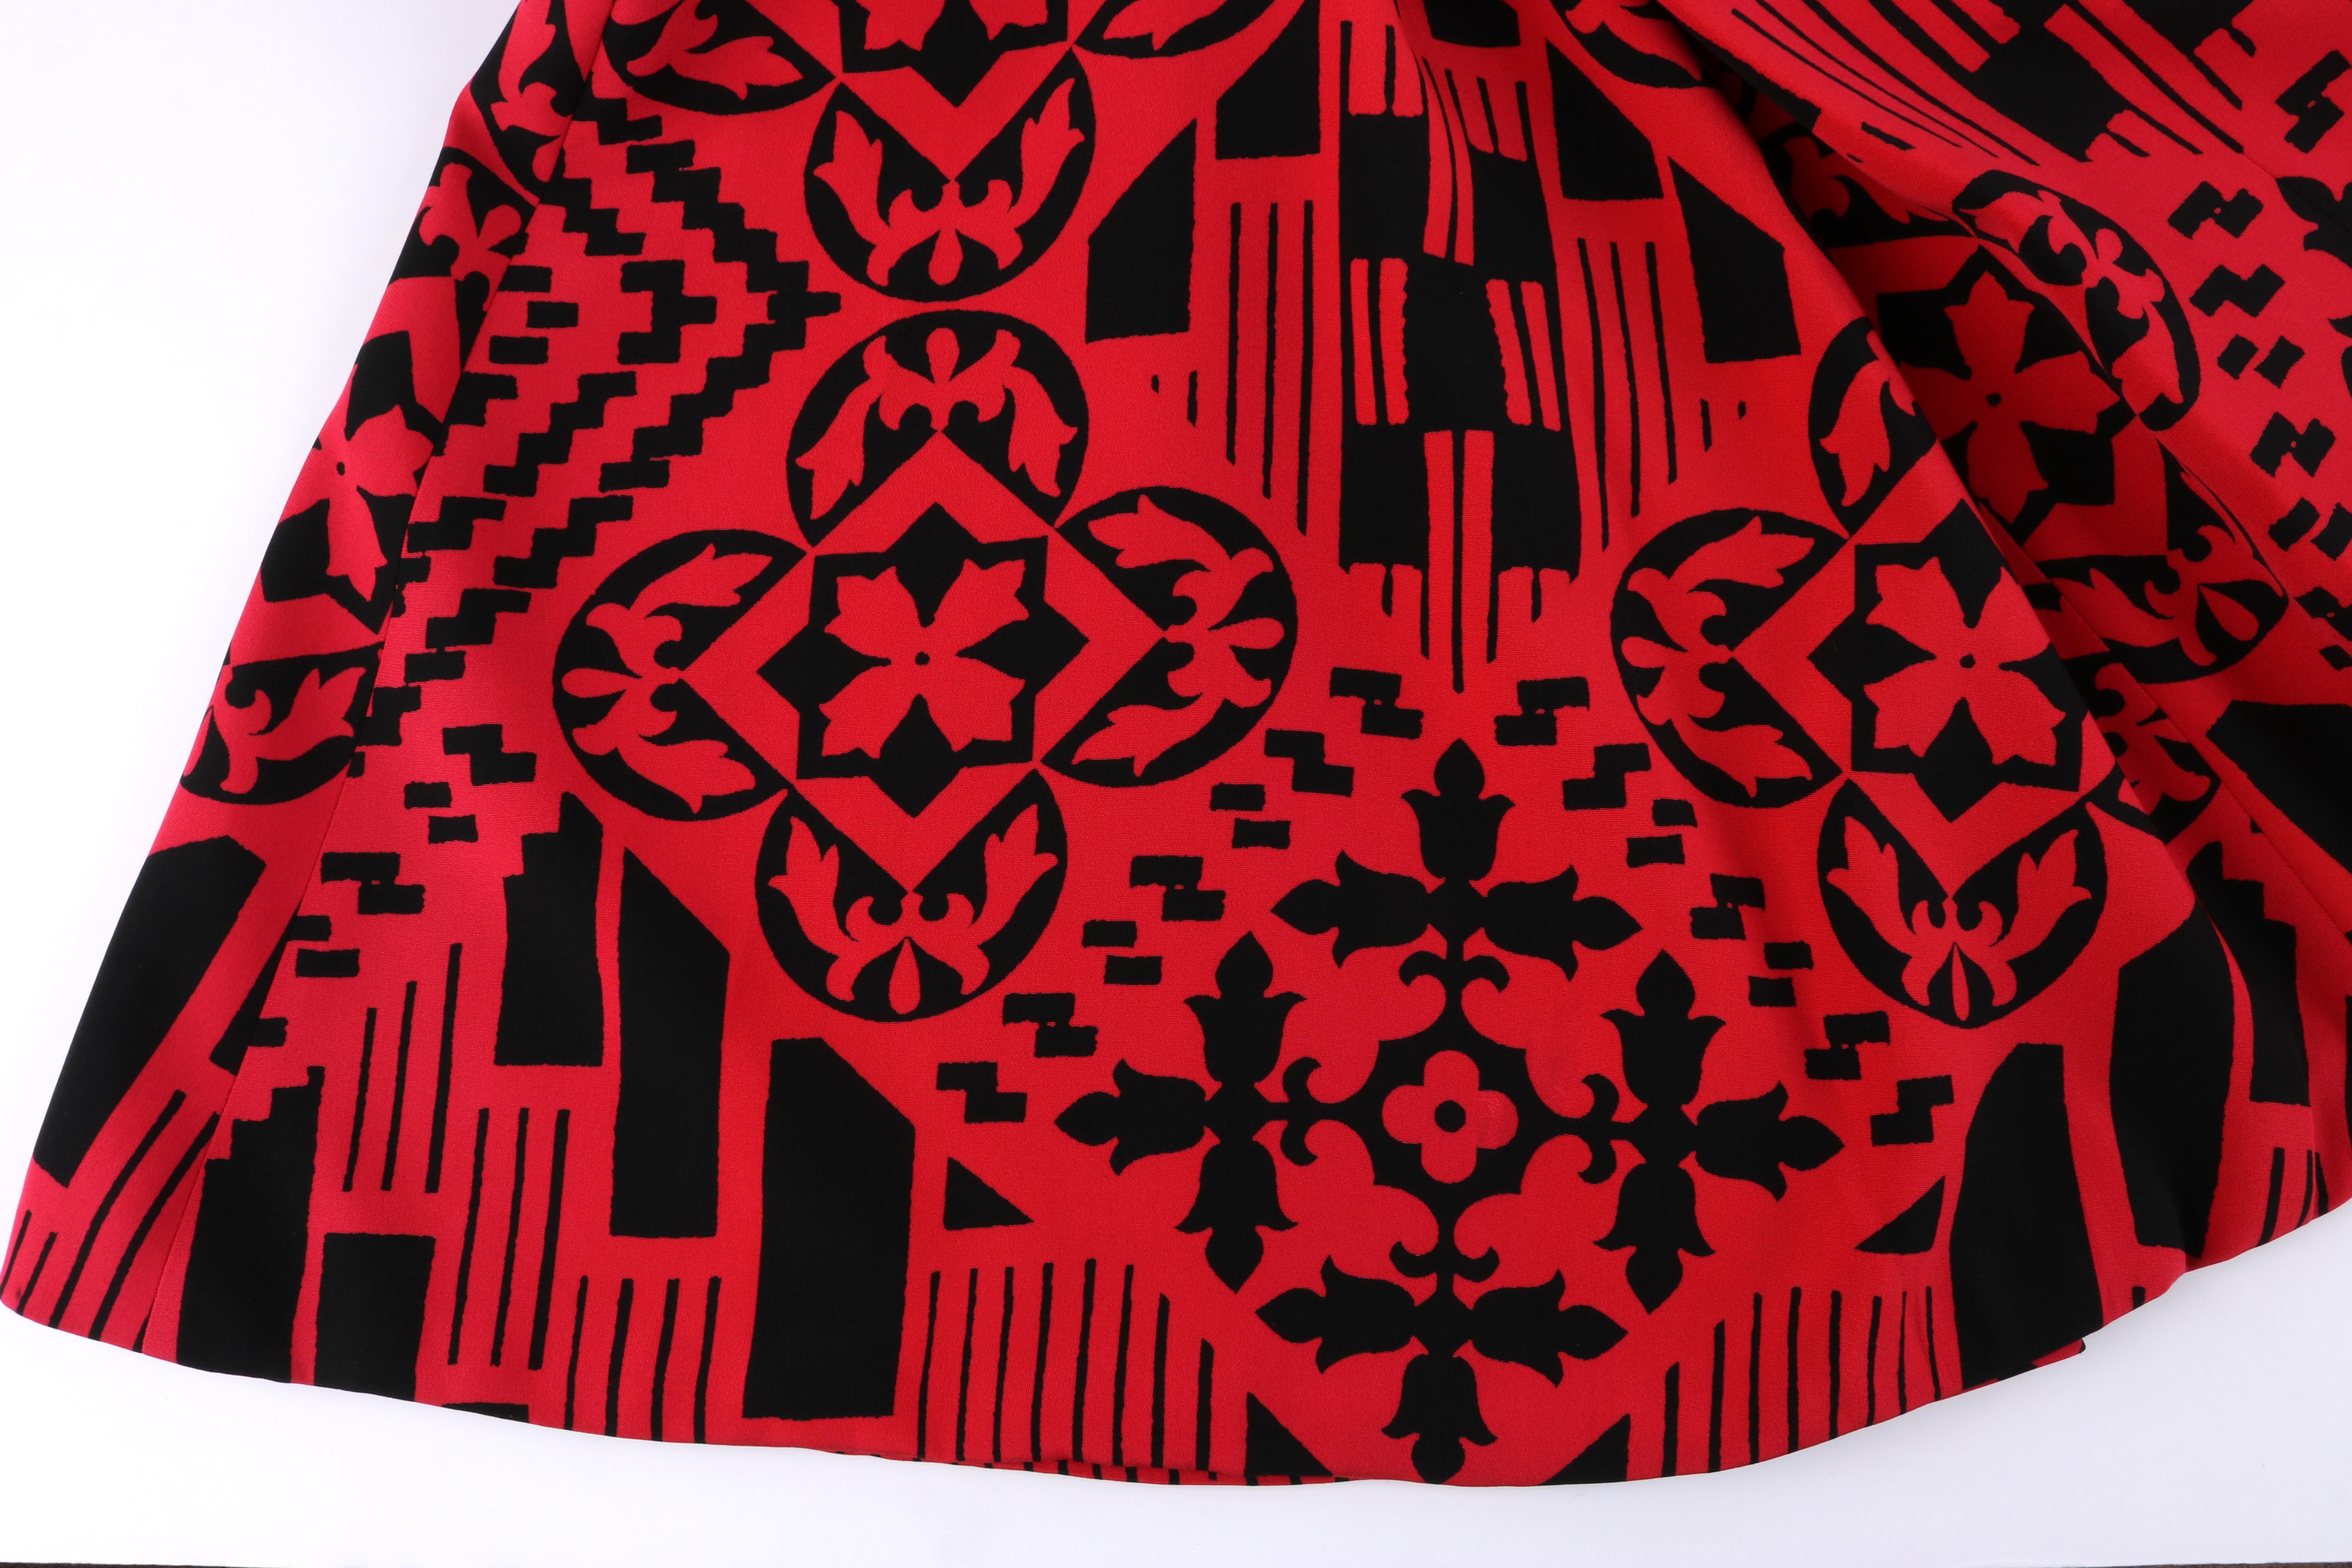 ALEXANDER McQUEEN S/S 2014 Red Black Mosaic Shape Print Fit N Flare Skater Dress 1